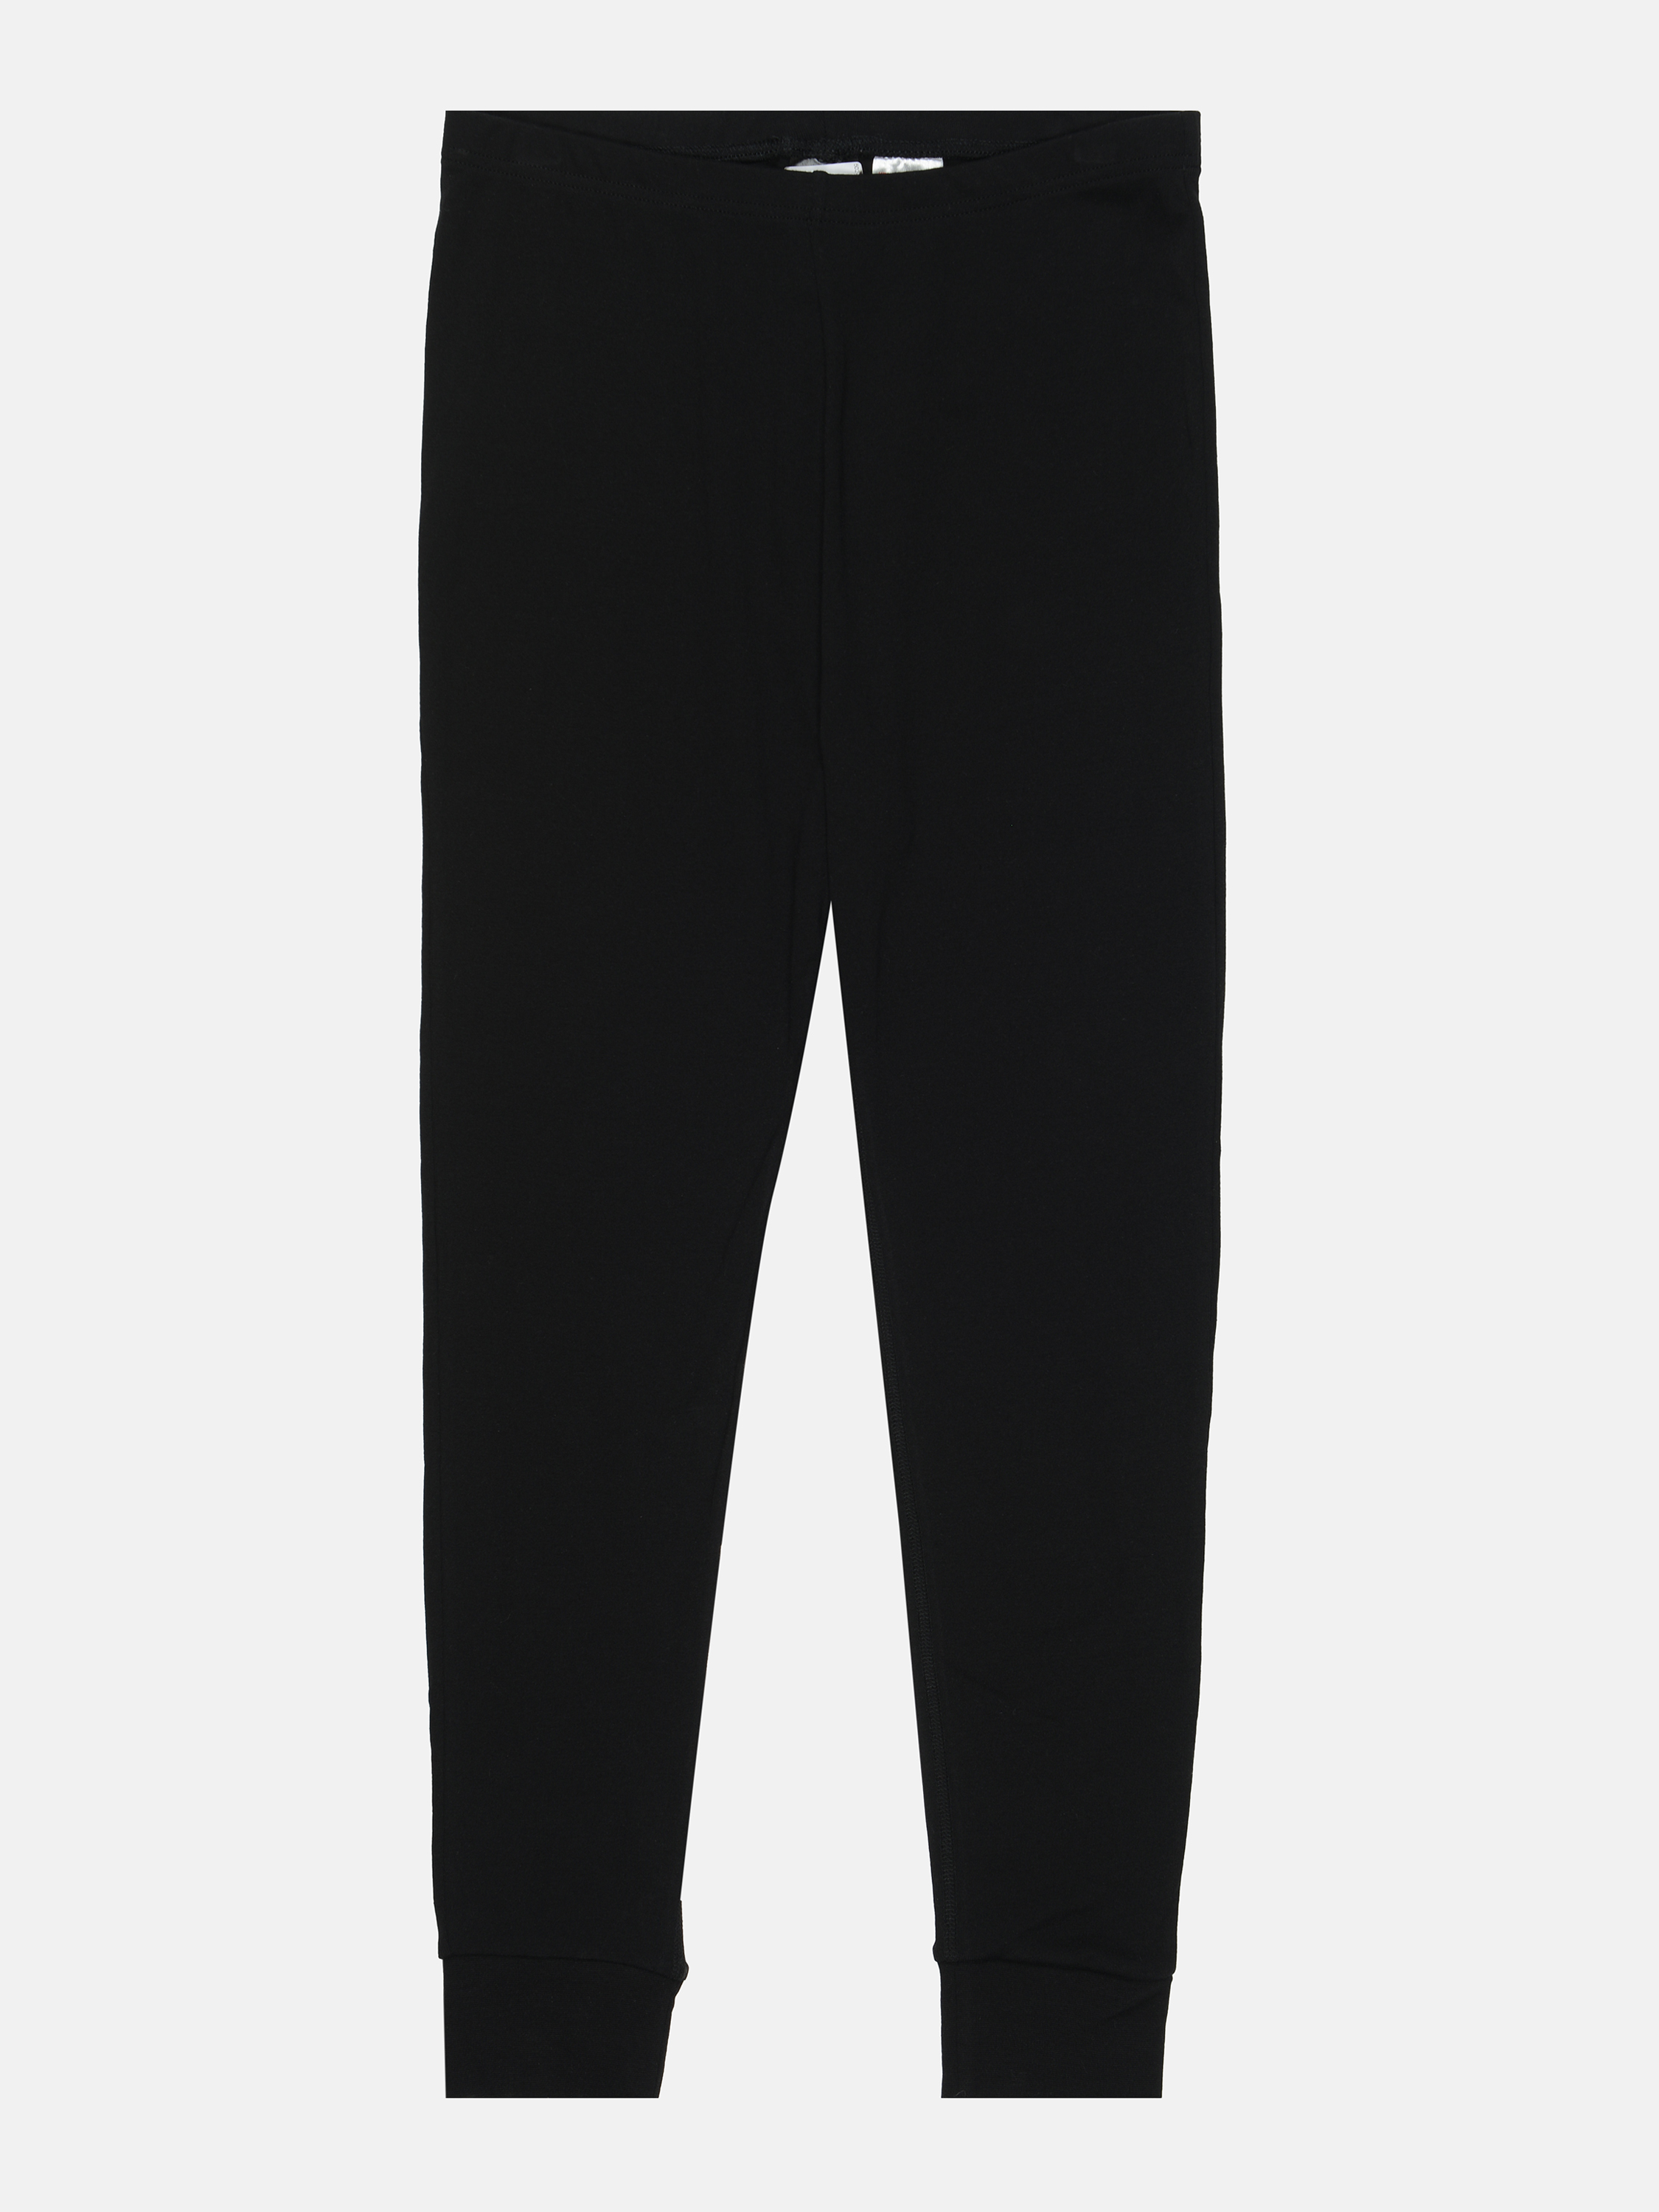 Пижамные штаны H&M 502-64000112 170 см Черные (hm02242200045)